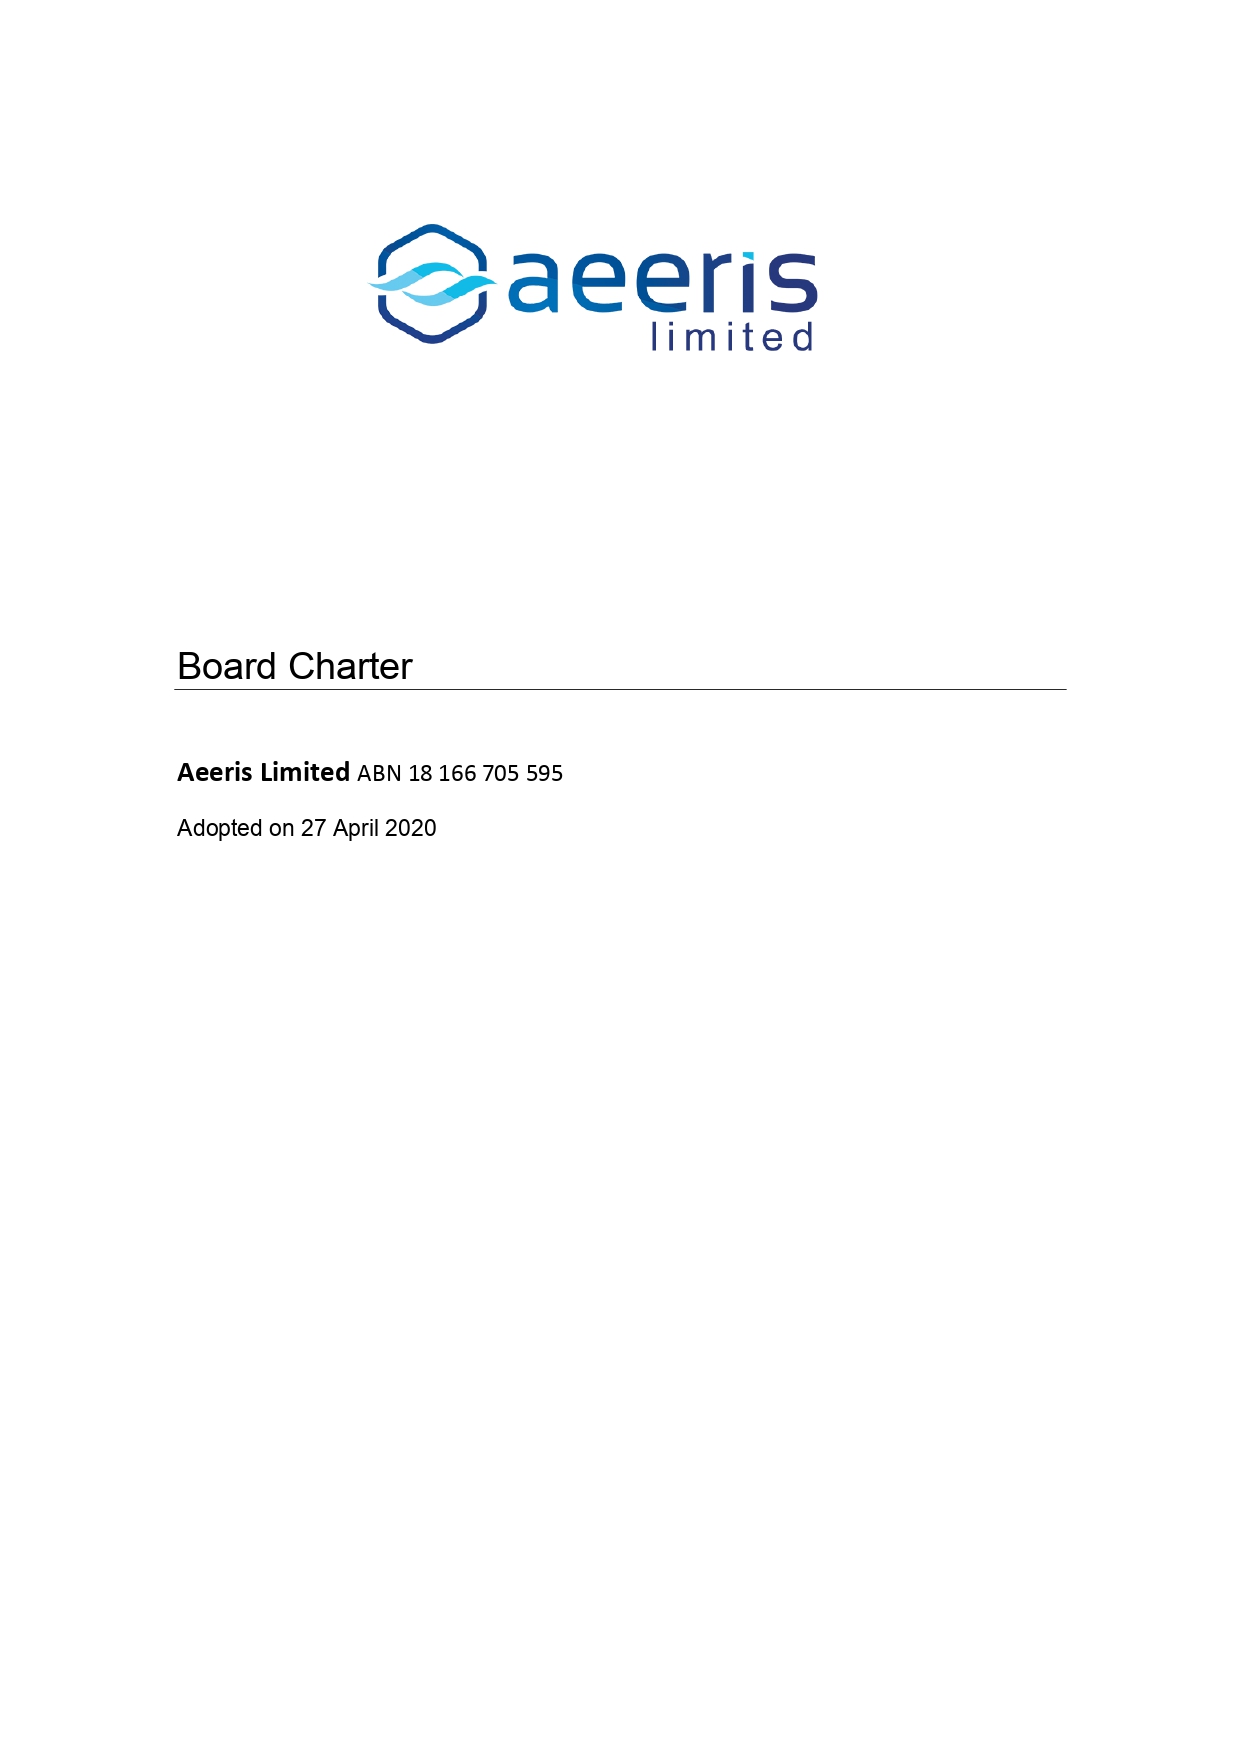 AER Board Charter